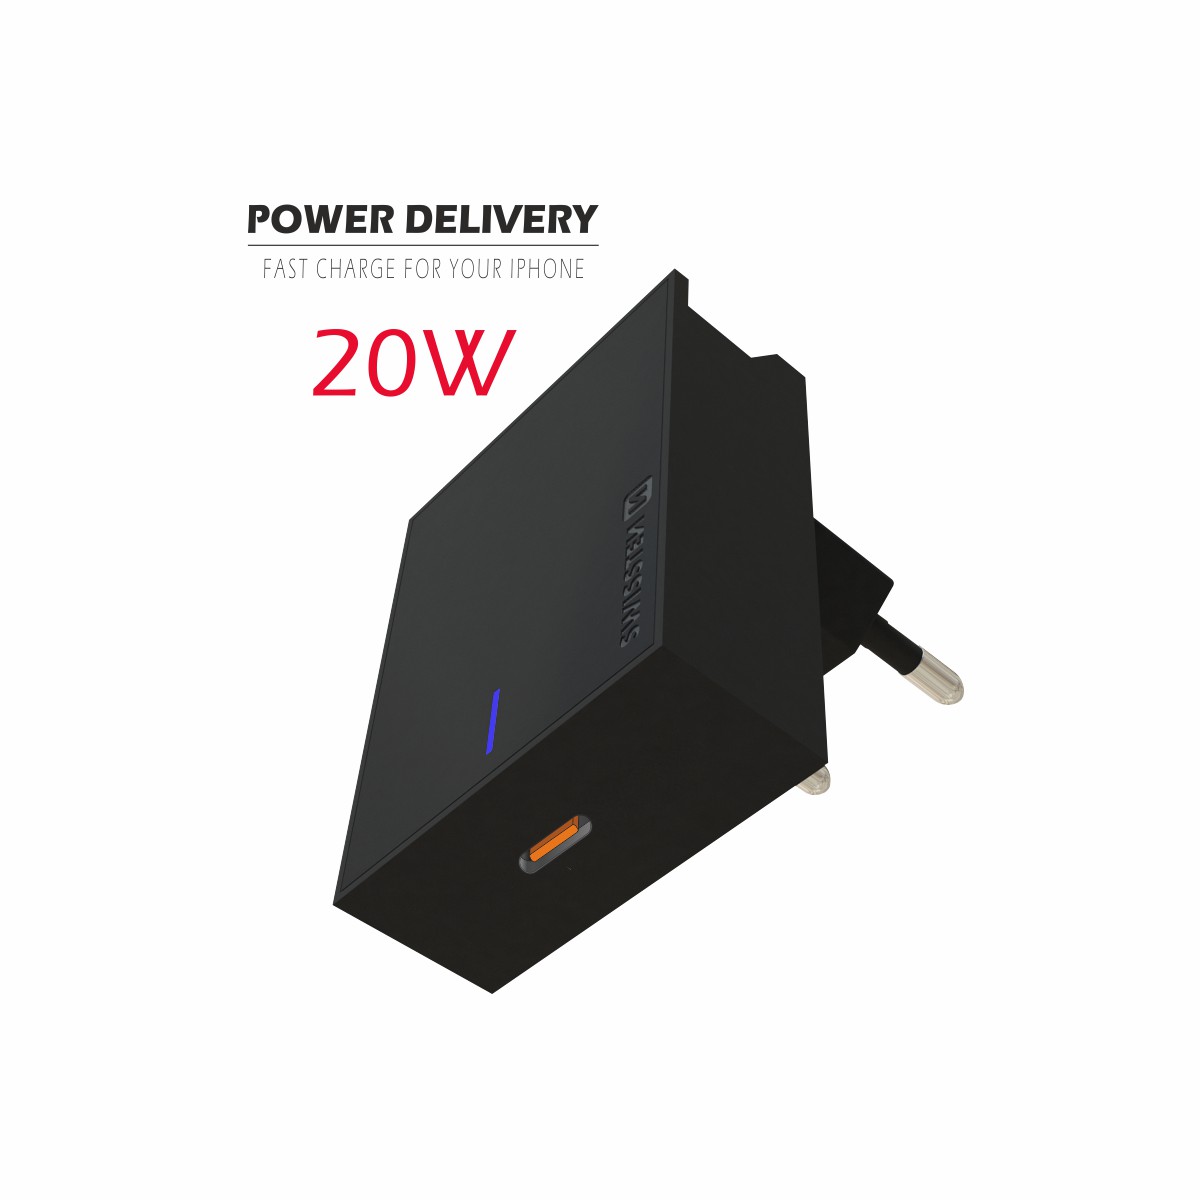 Power Delivery adapter pre iPhone s výkonem 20W.